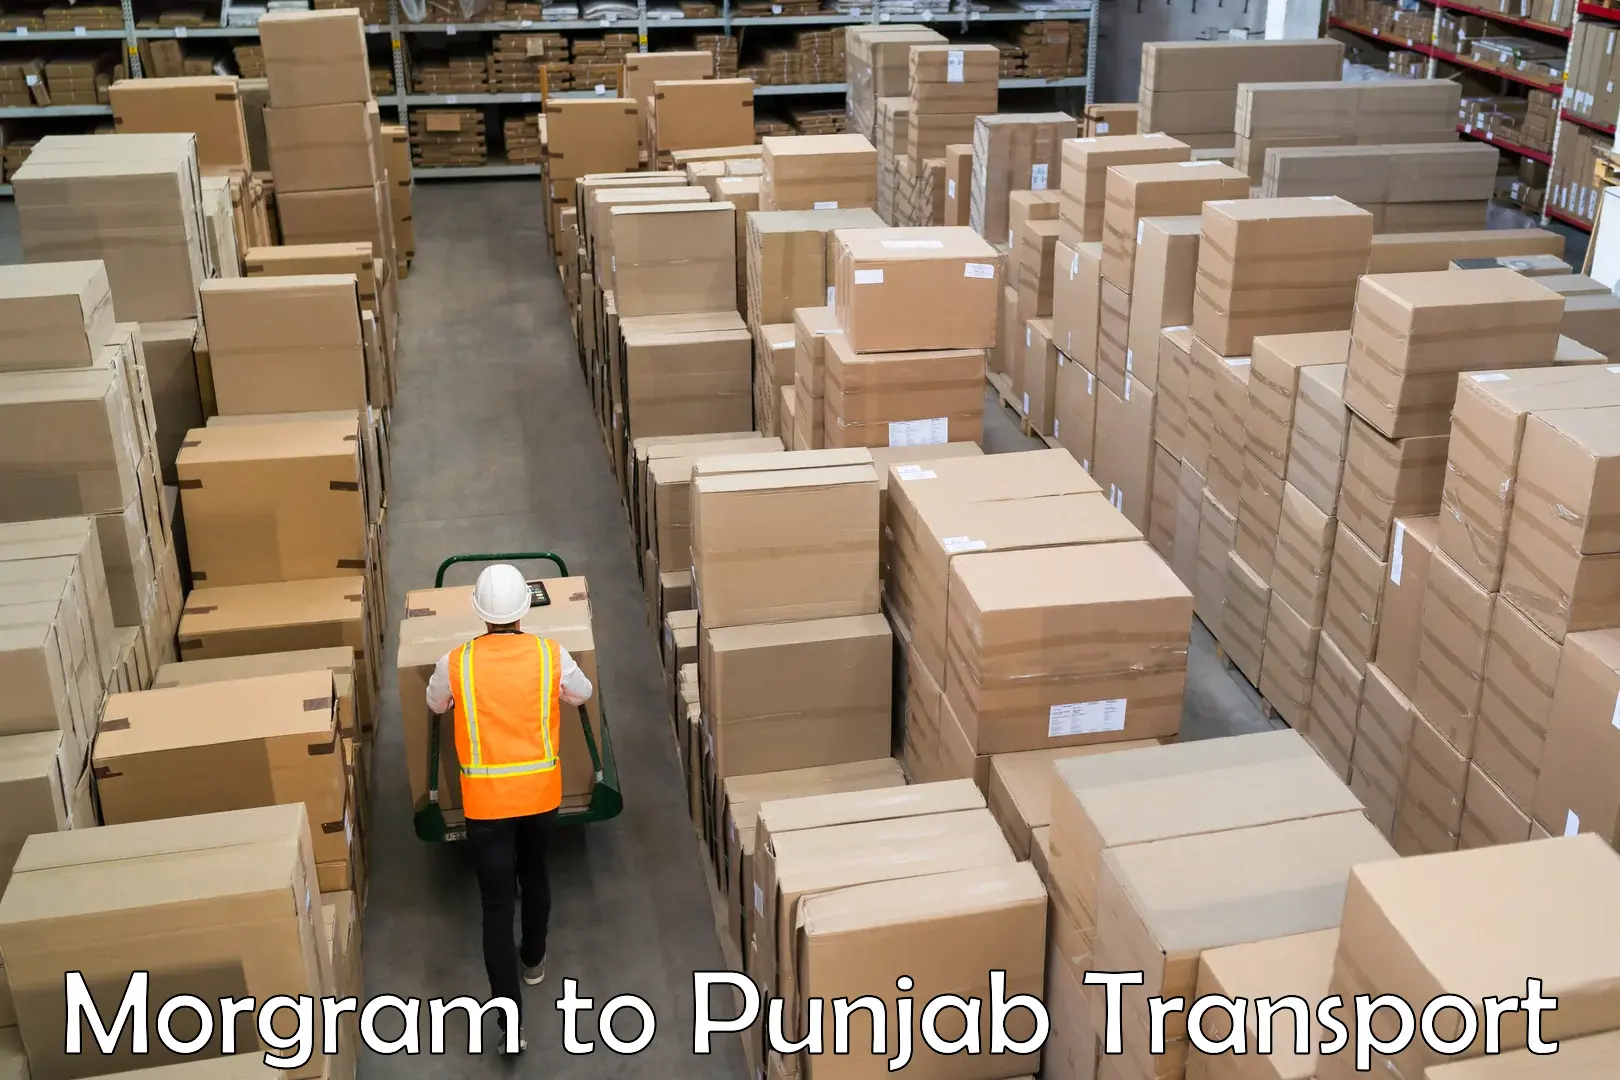 Goods delivery service Morgram to Punjab